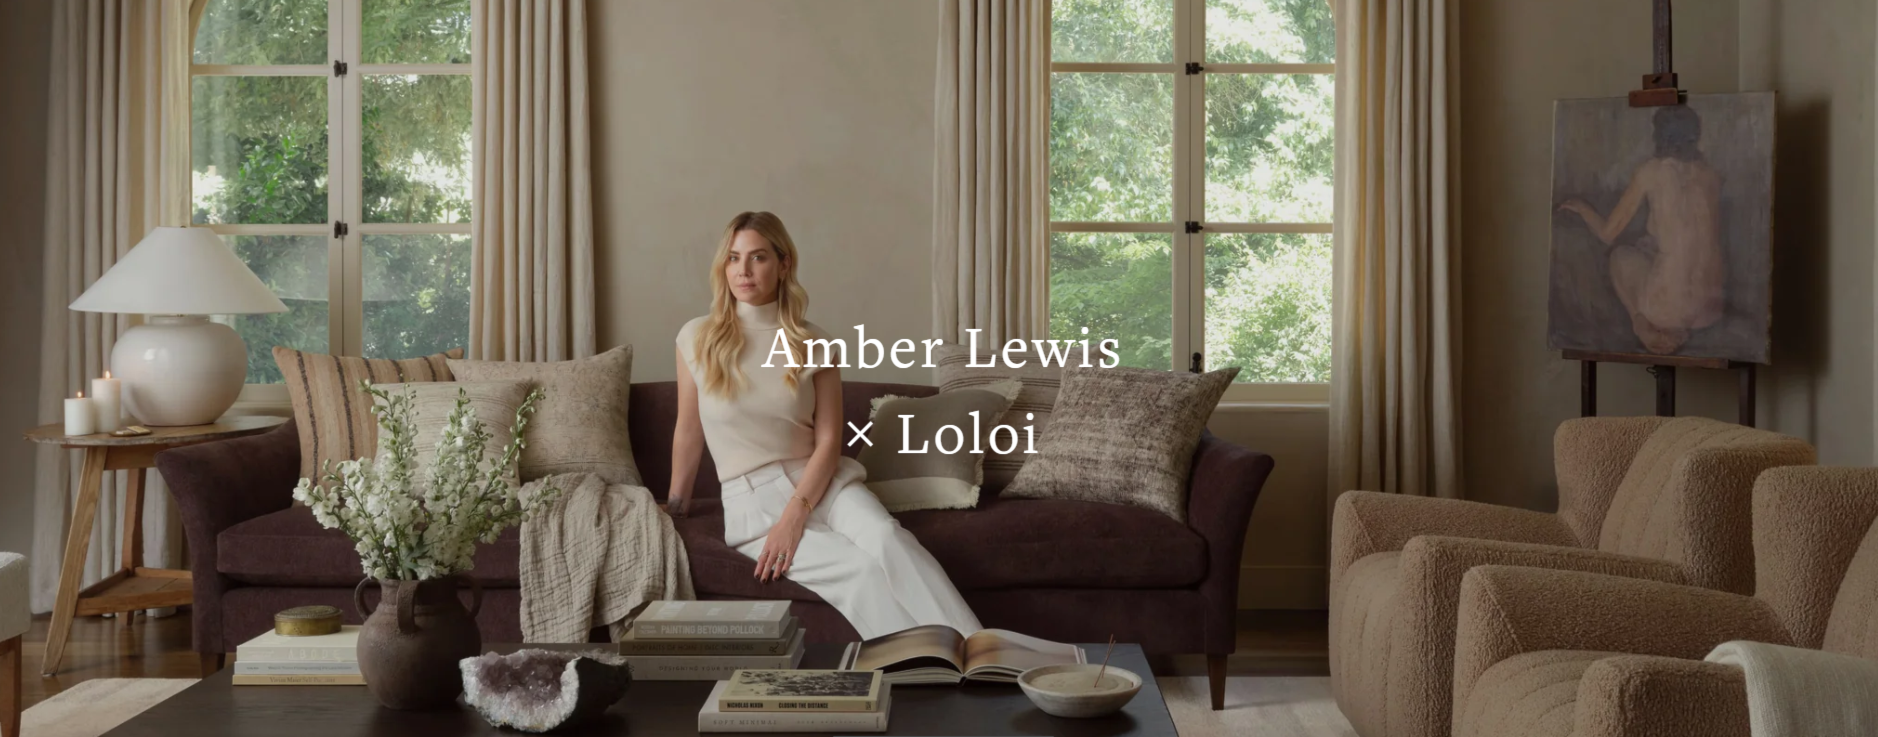 Amber Lewis x Loloi